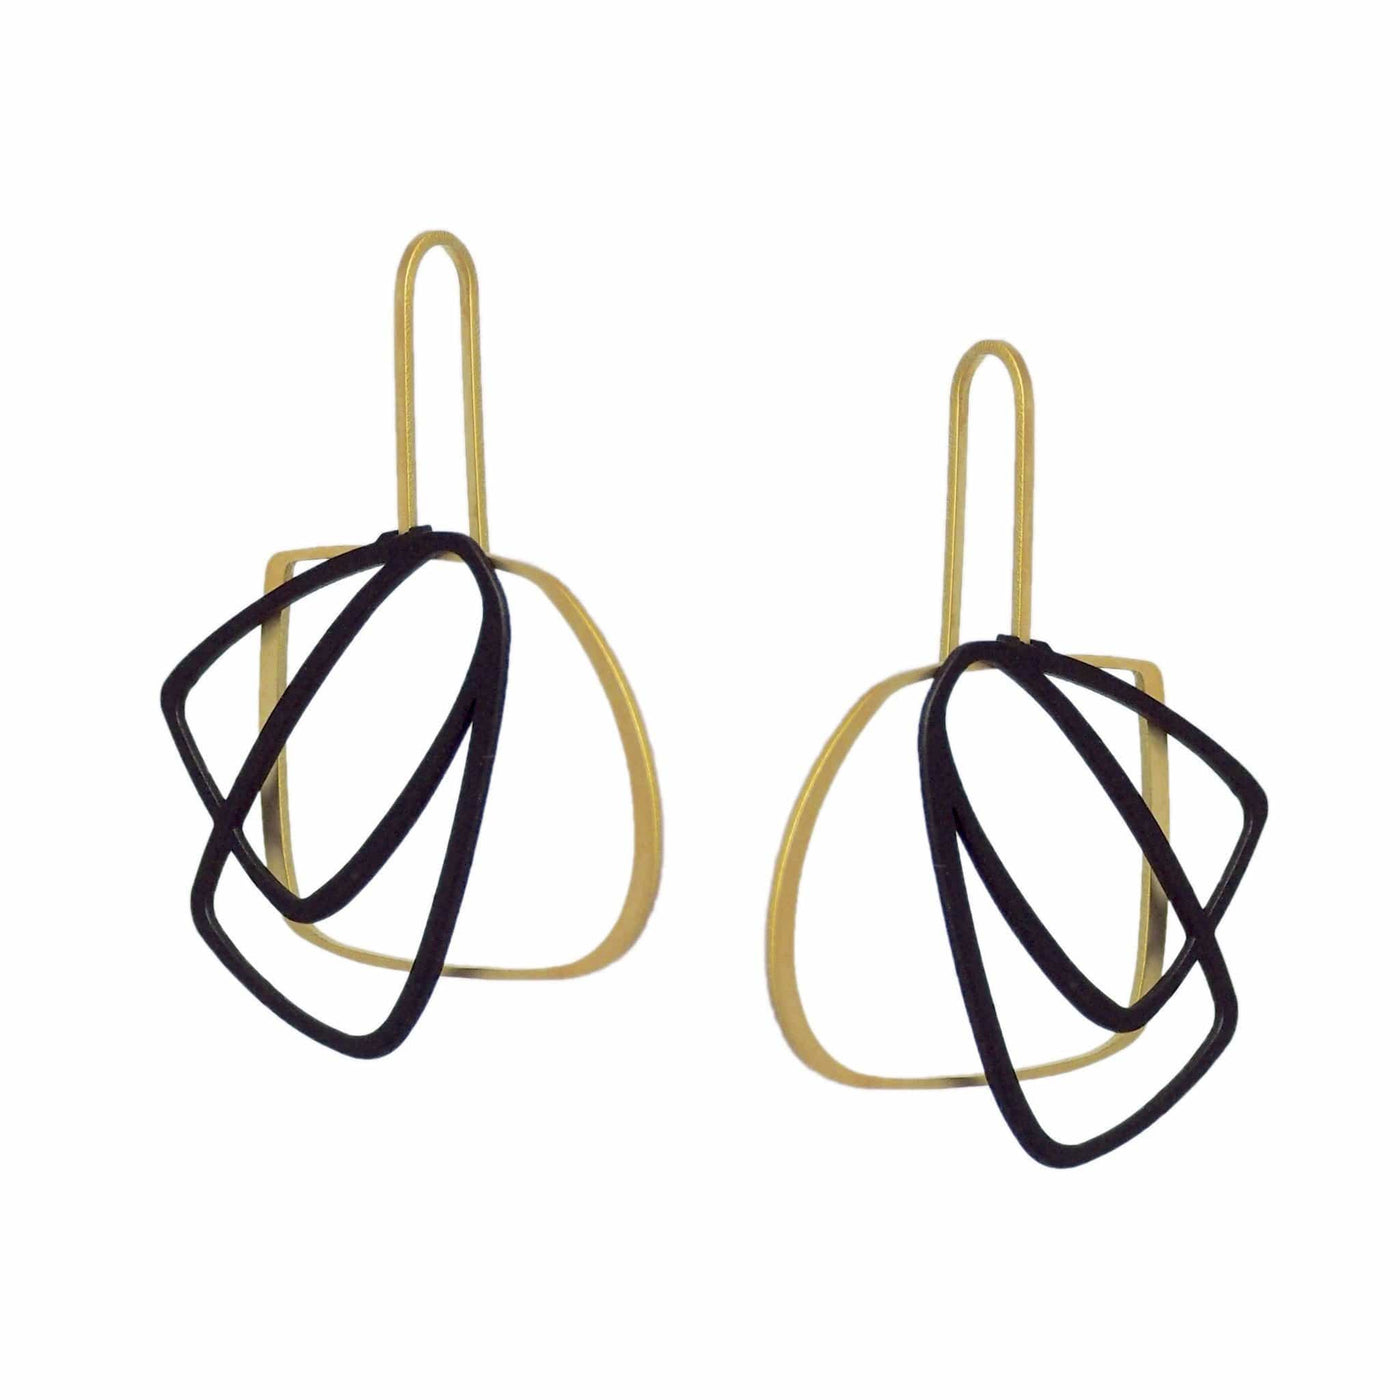 X2 Medium Outline Earrings - Raw/ Black - inSync design